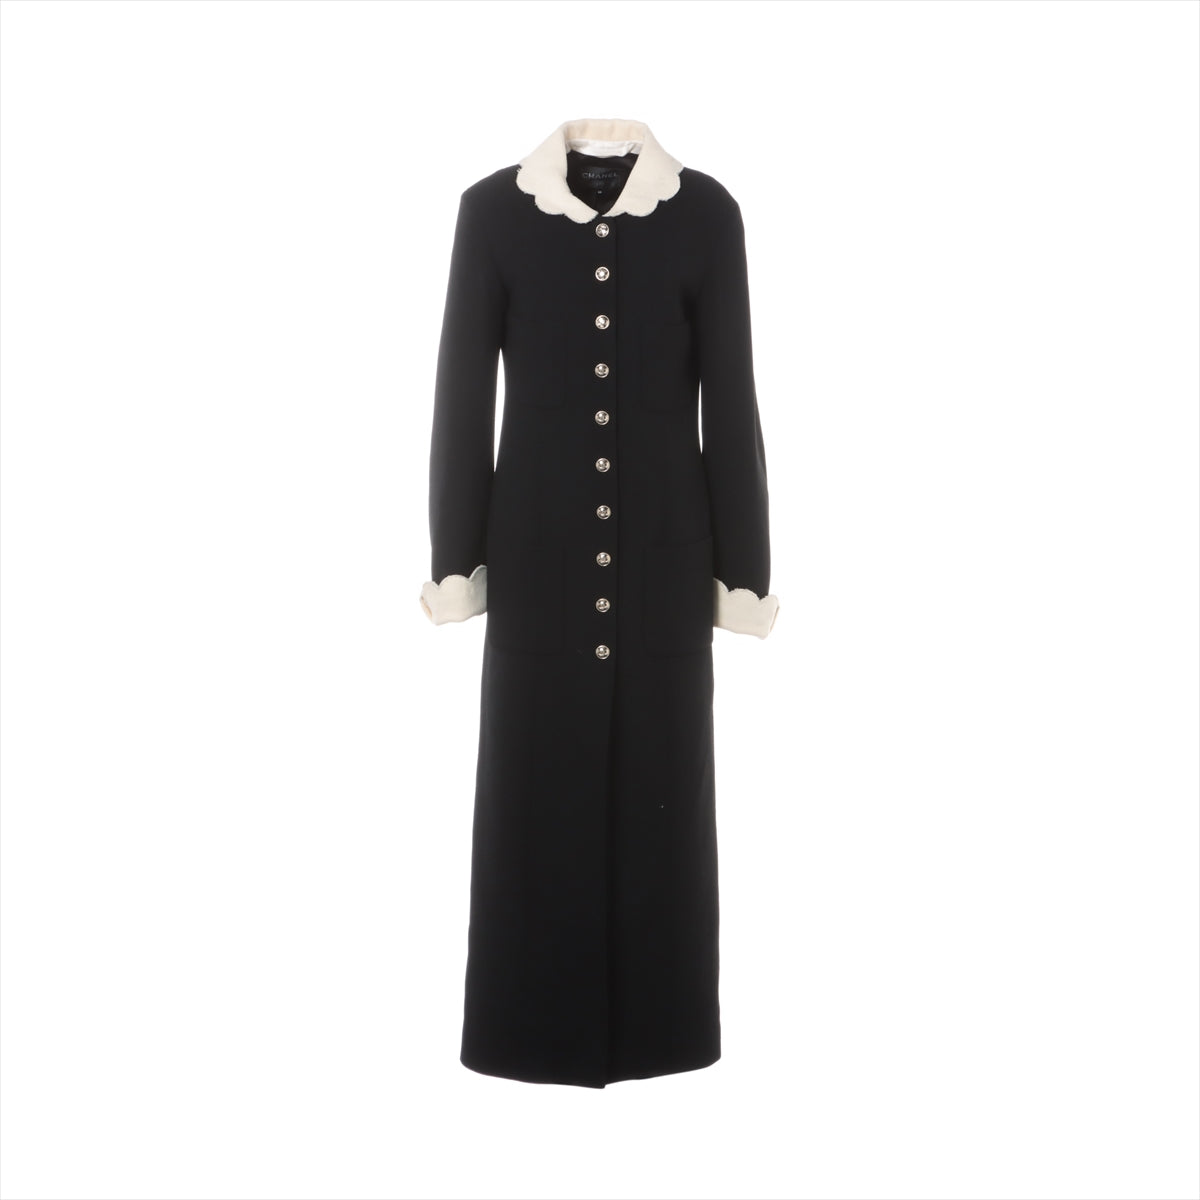 Chanel Coco Button 20K Wool & silk robes 38 Ladies' Black  Long coat P65305V34823 collars Detachable cuffs